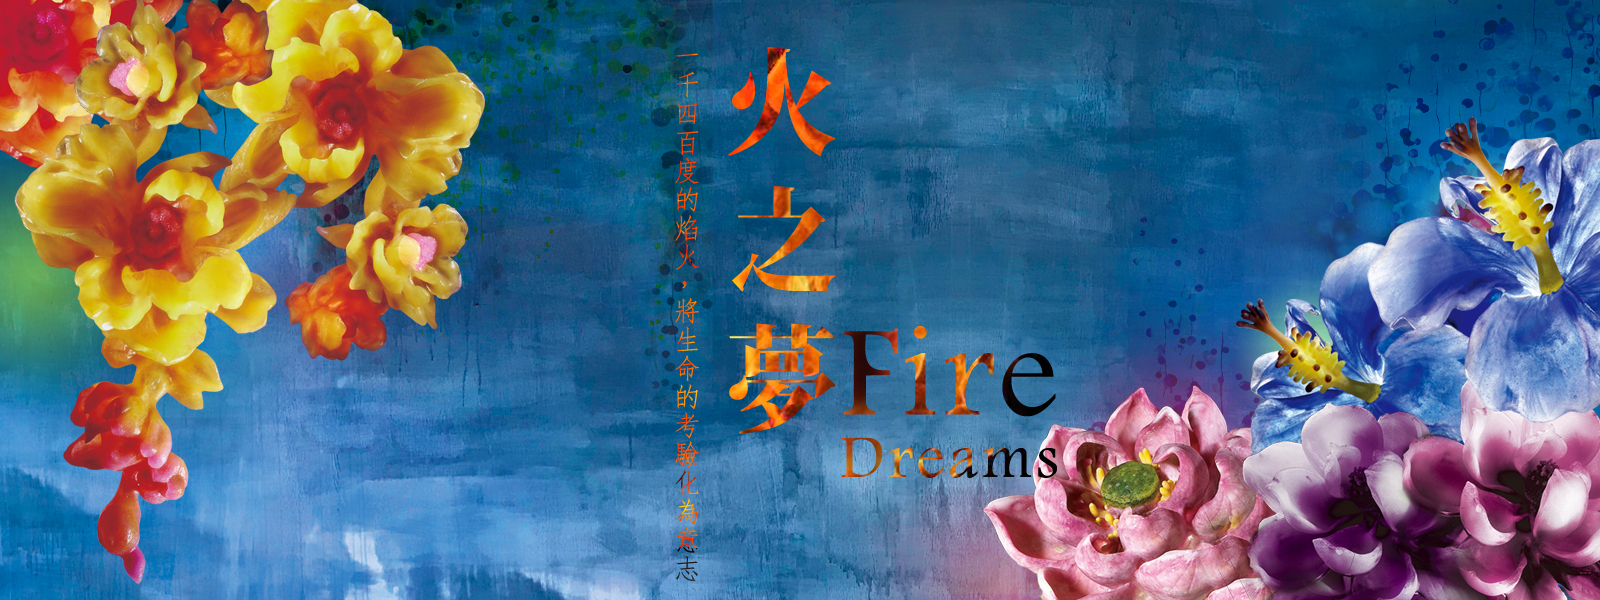 Fire Dreams．火之夢